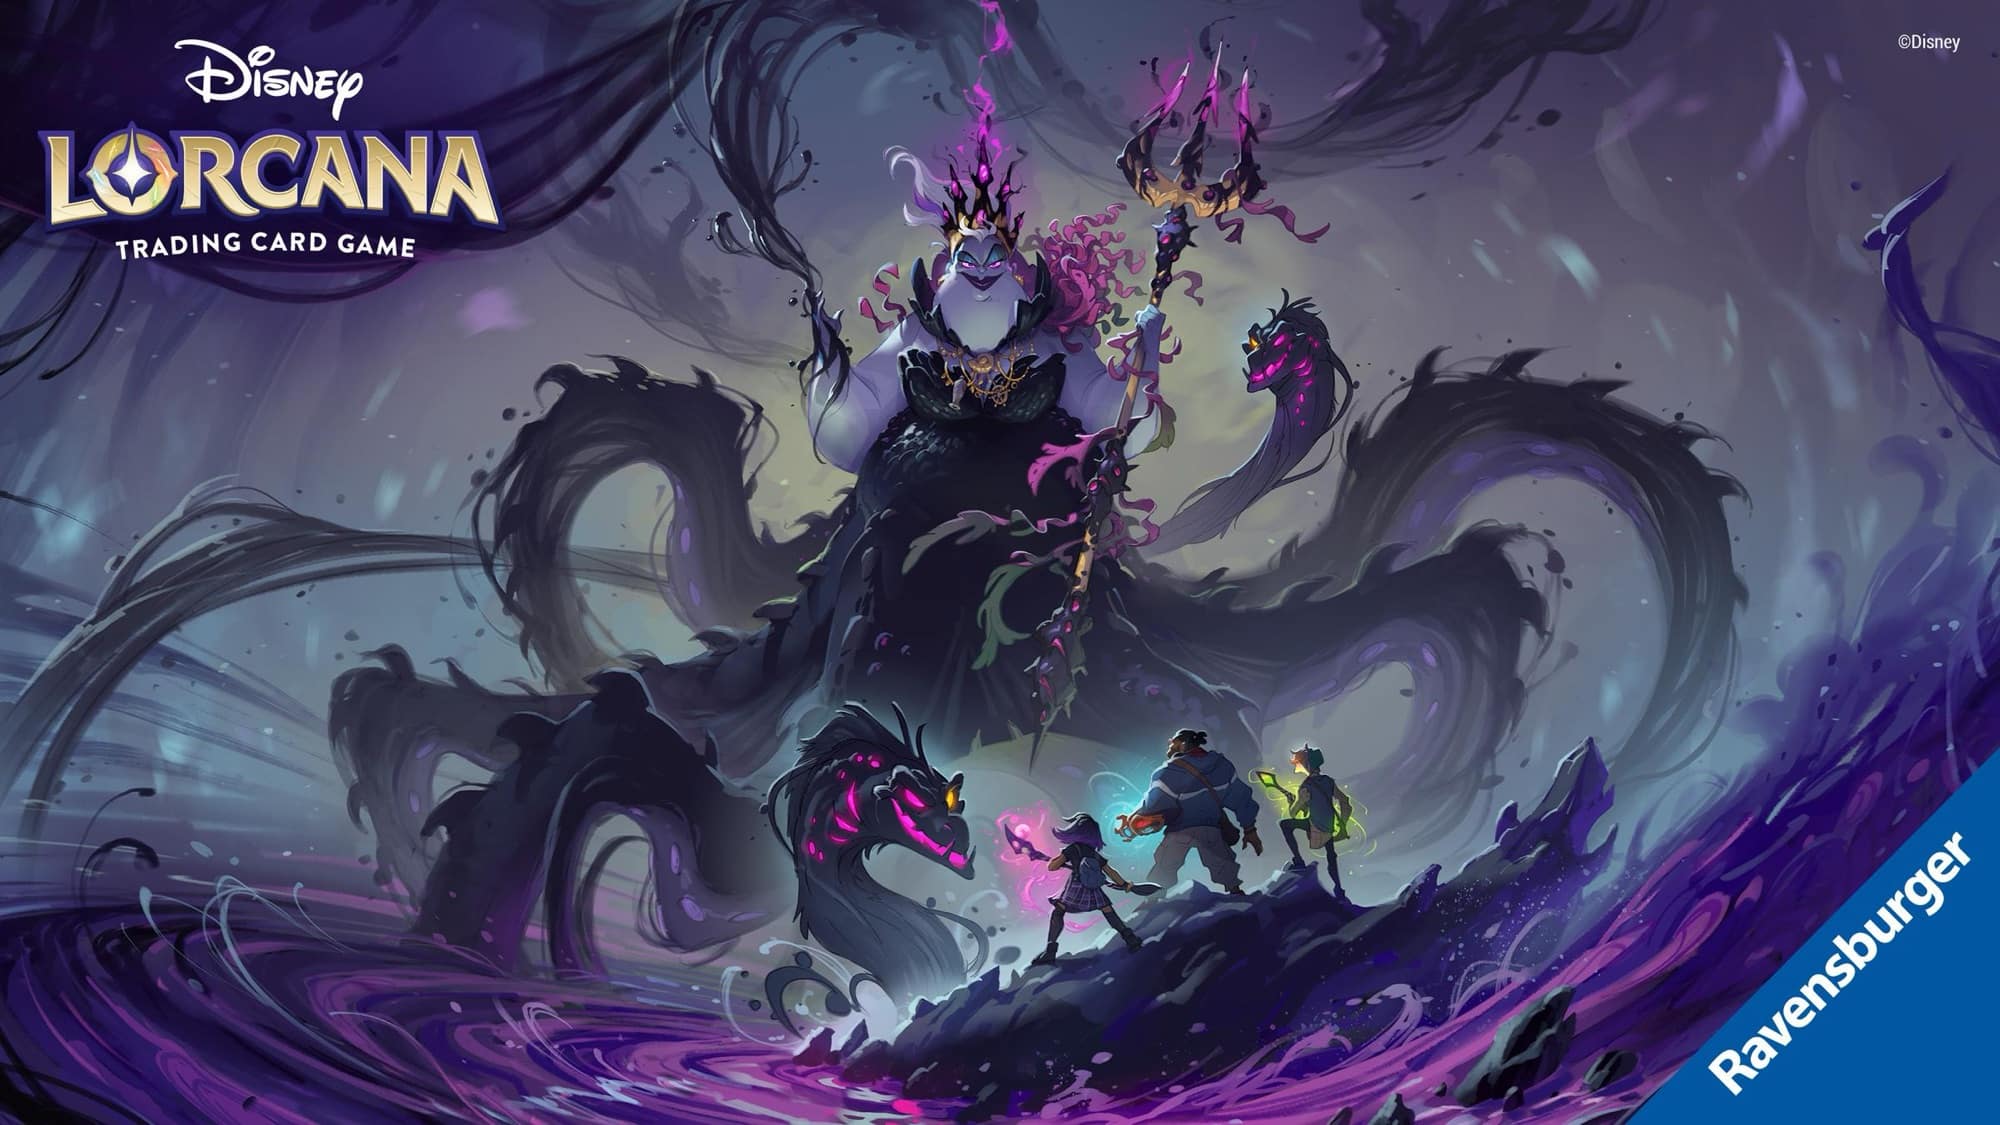 Ursula’s Return Championship Playmat Reveal